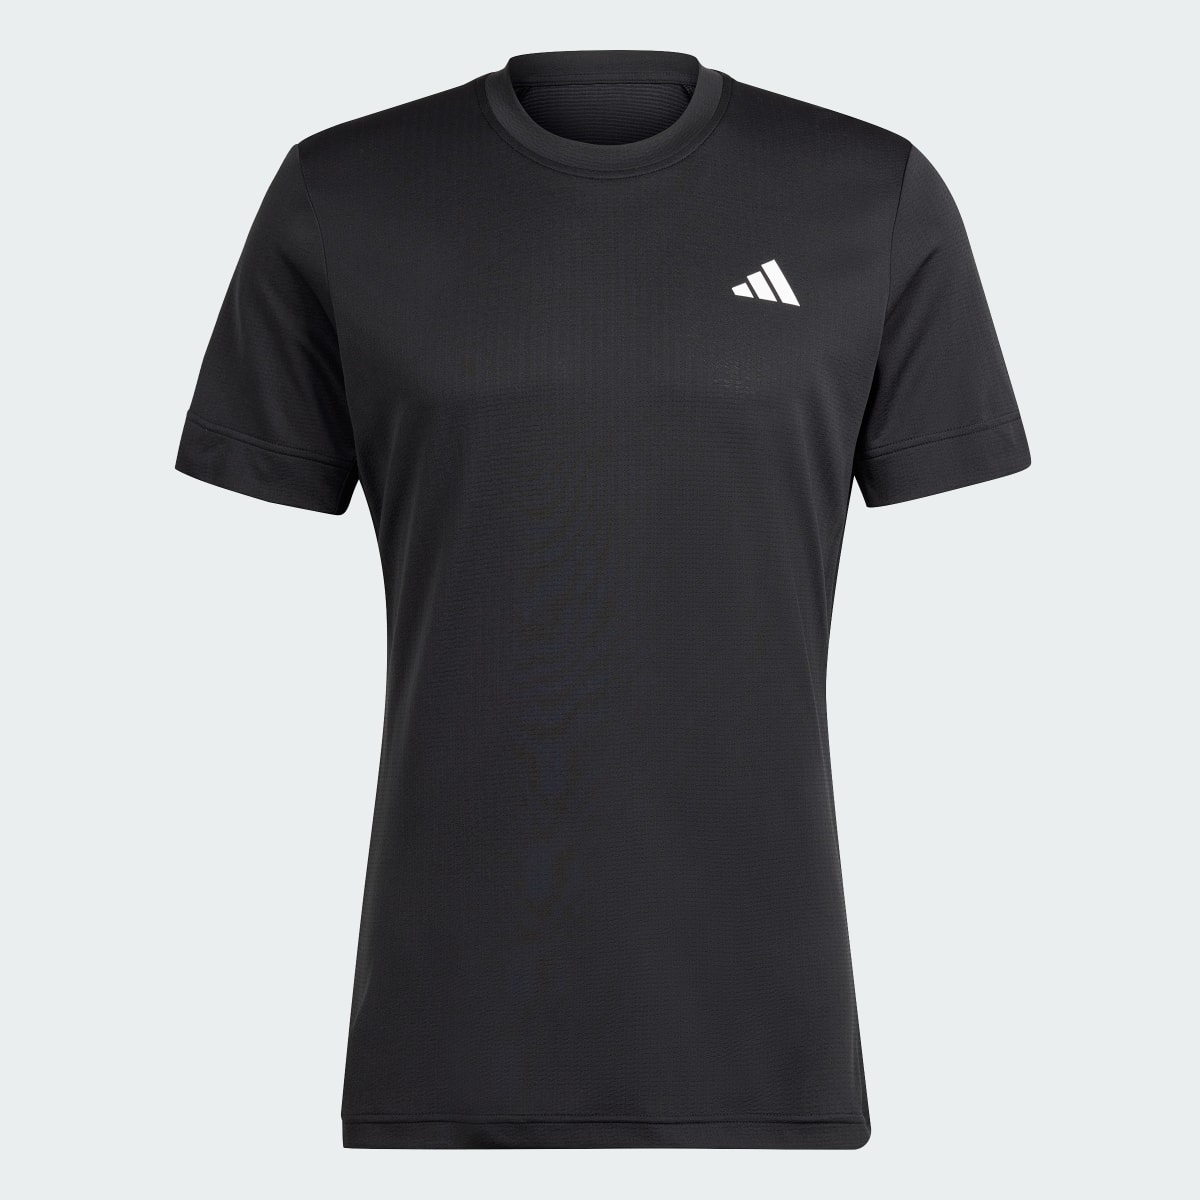 Adidas Tennis FreeLift T-Shirt. 5